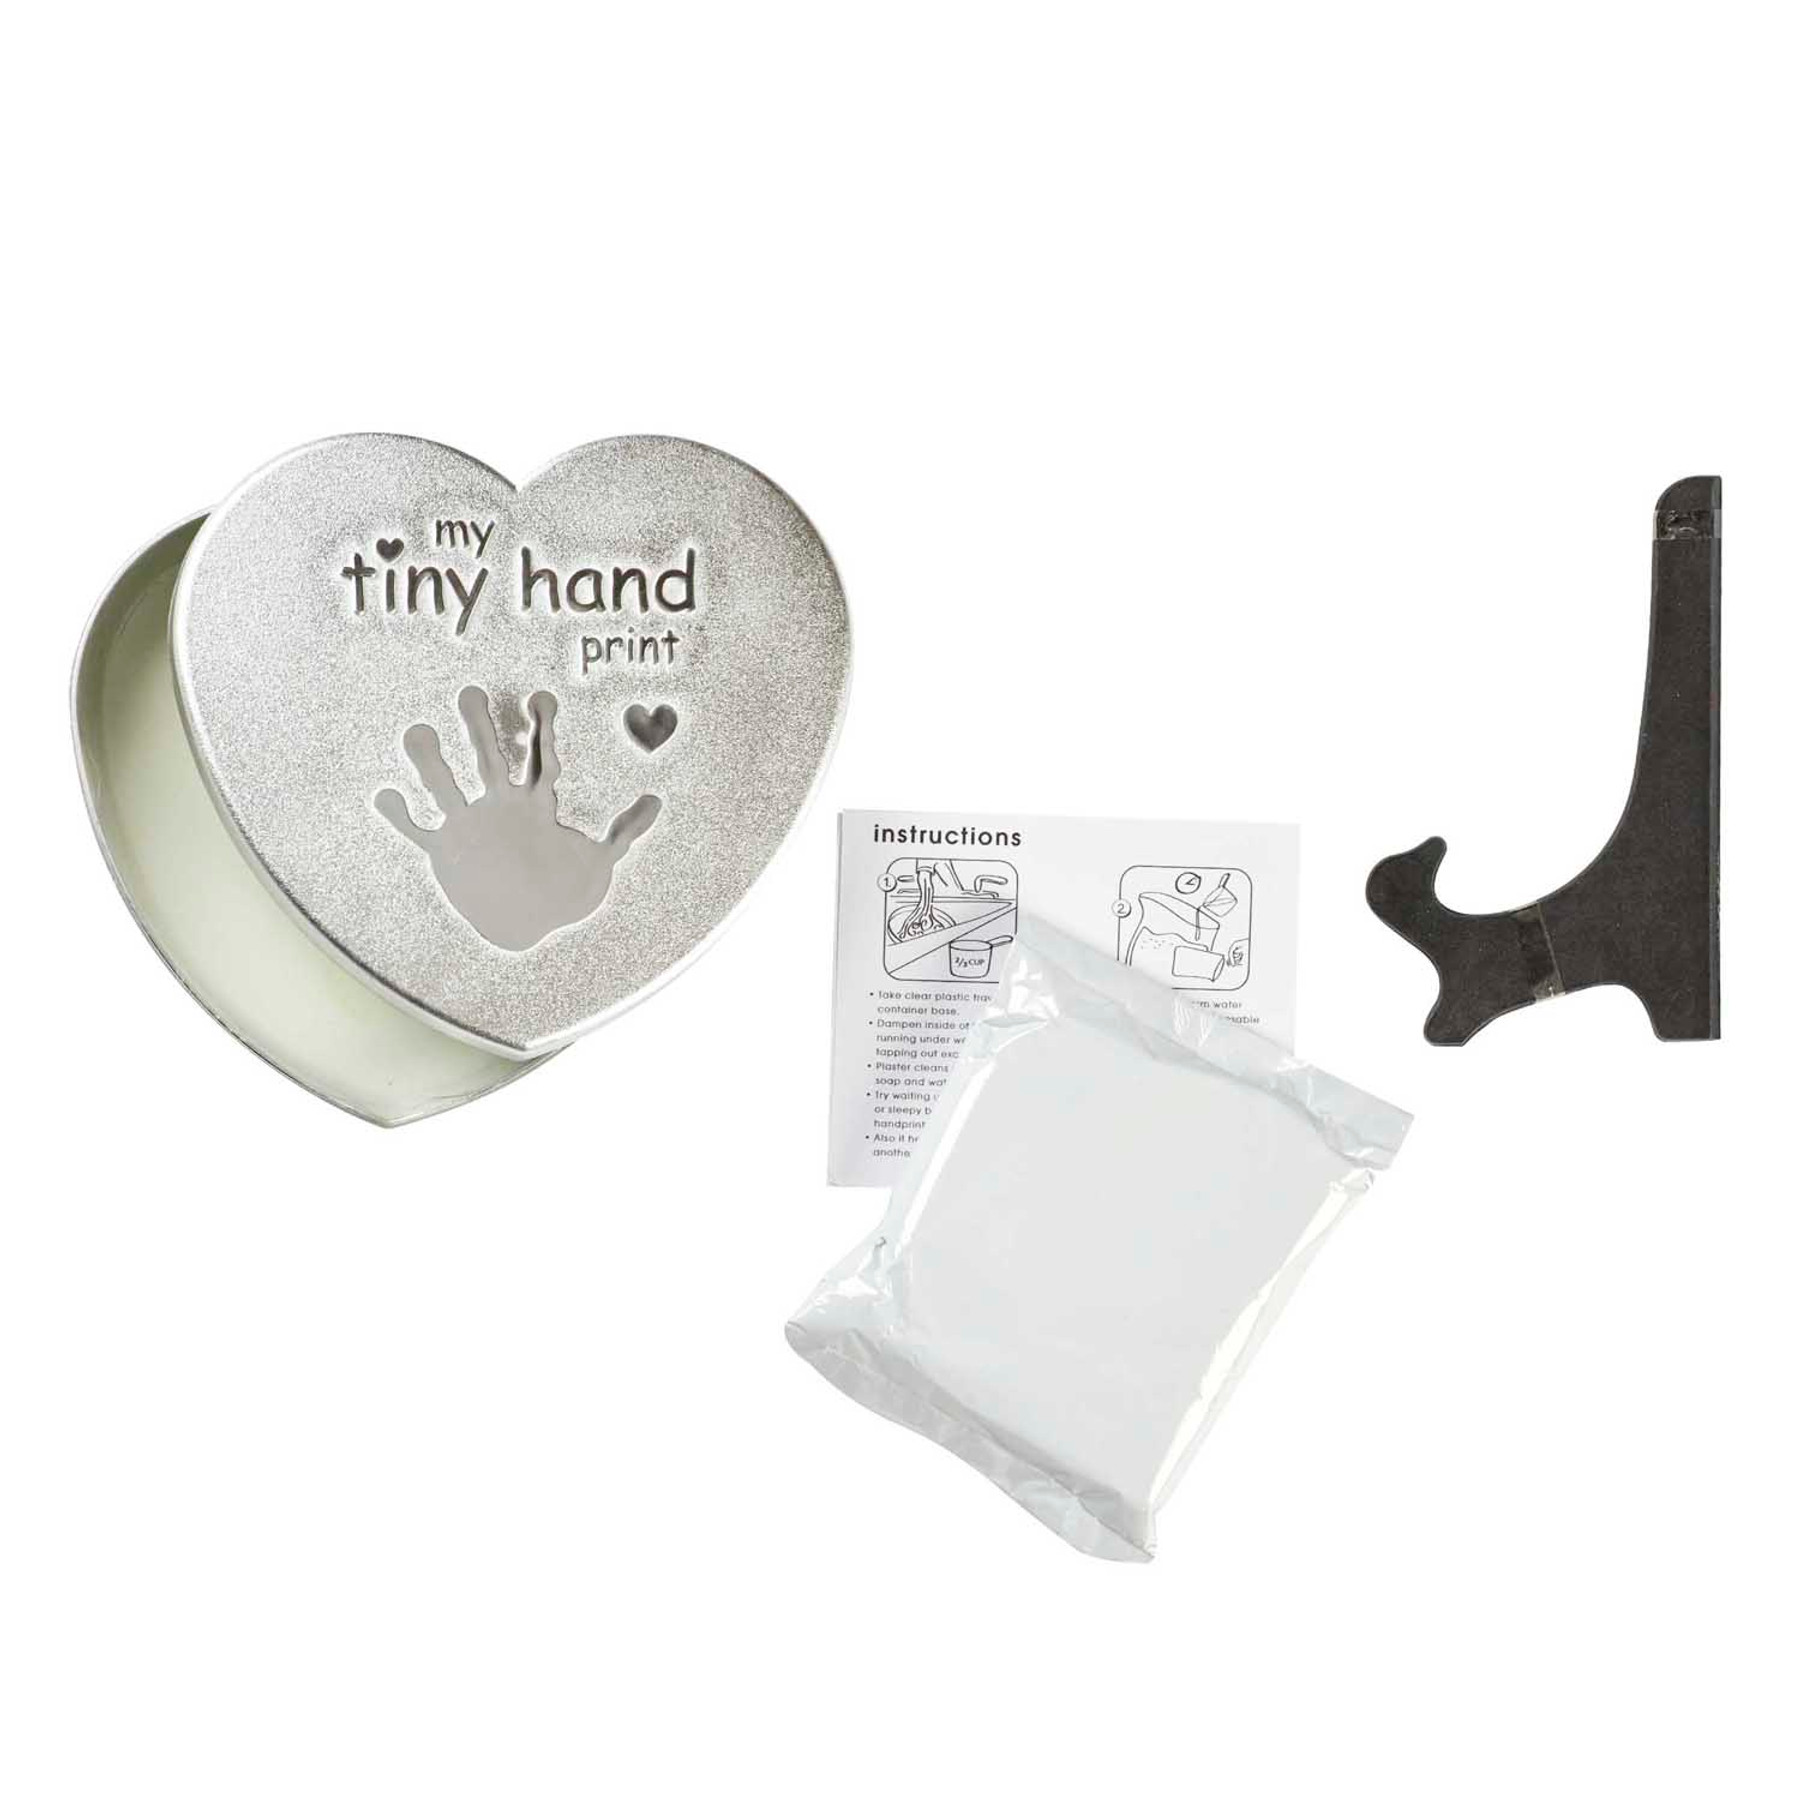 My Tiny Hand Prints Kit 